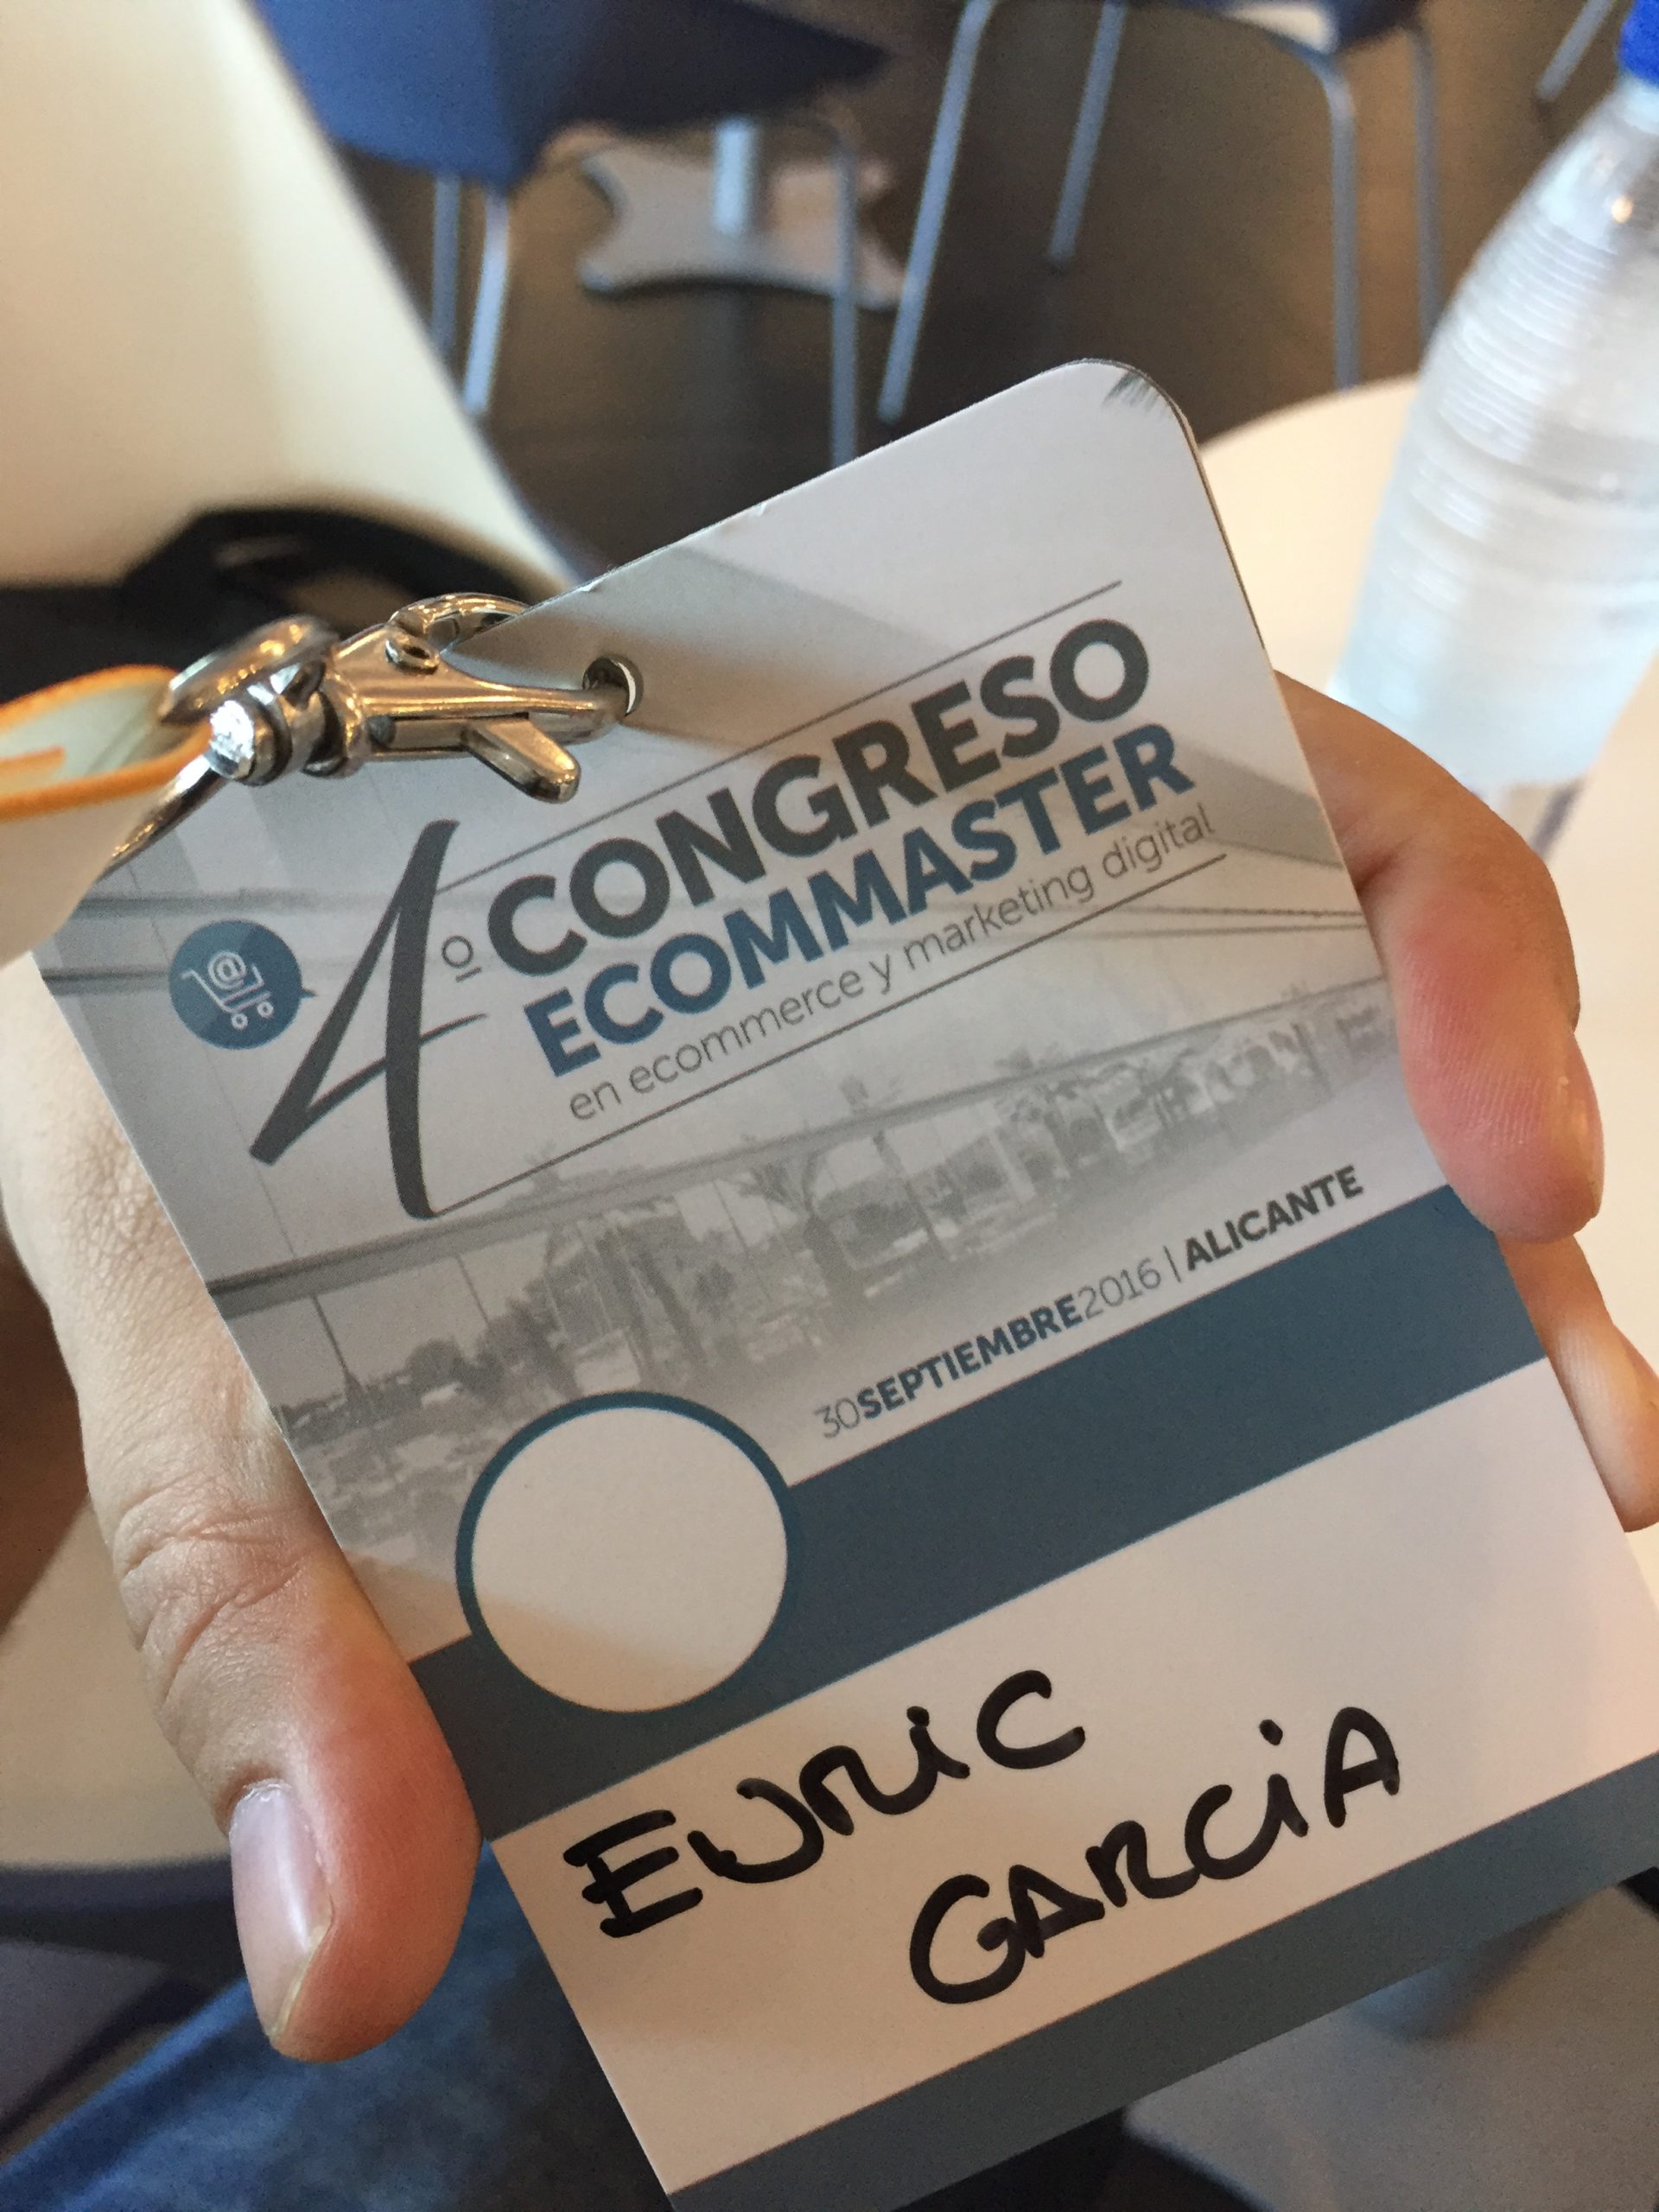 IV Ecommaster Congress